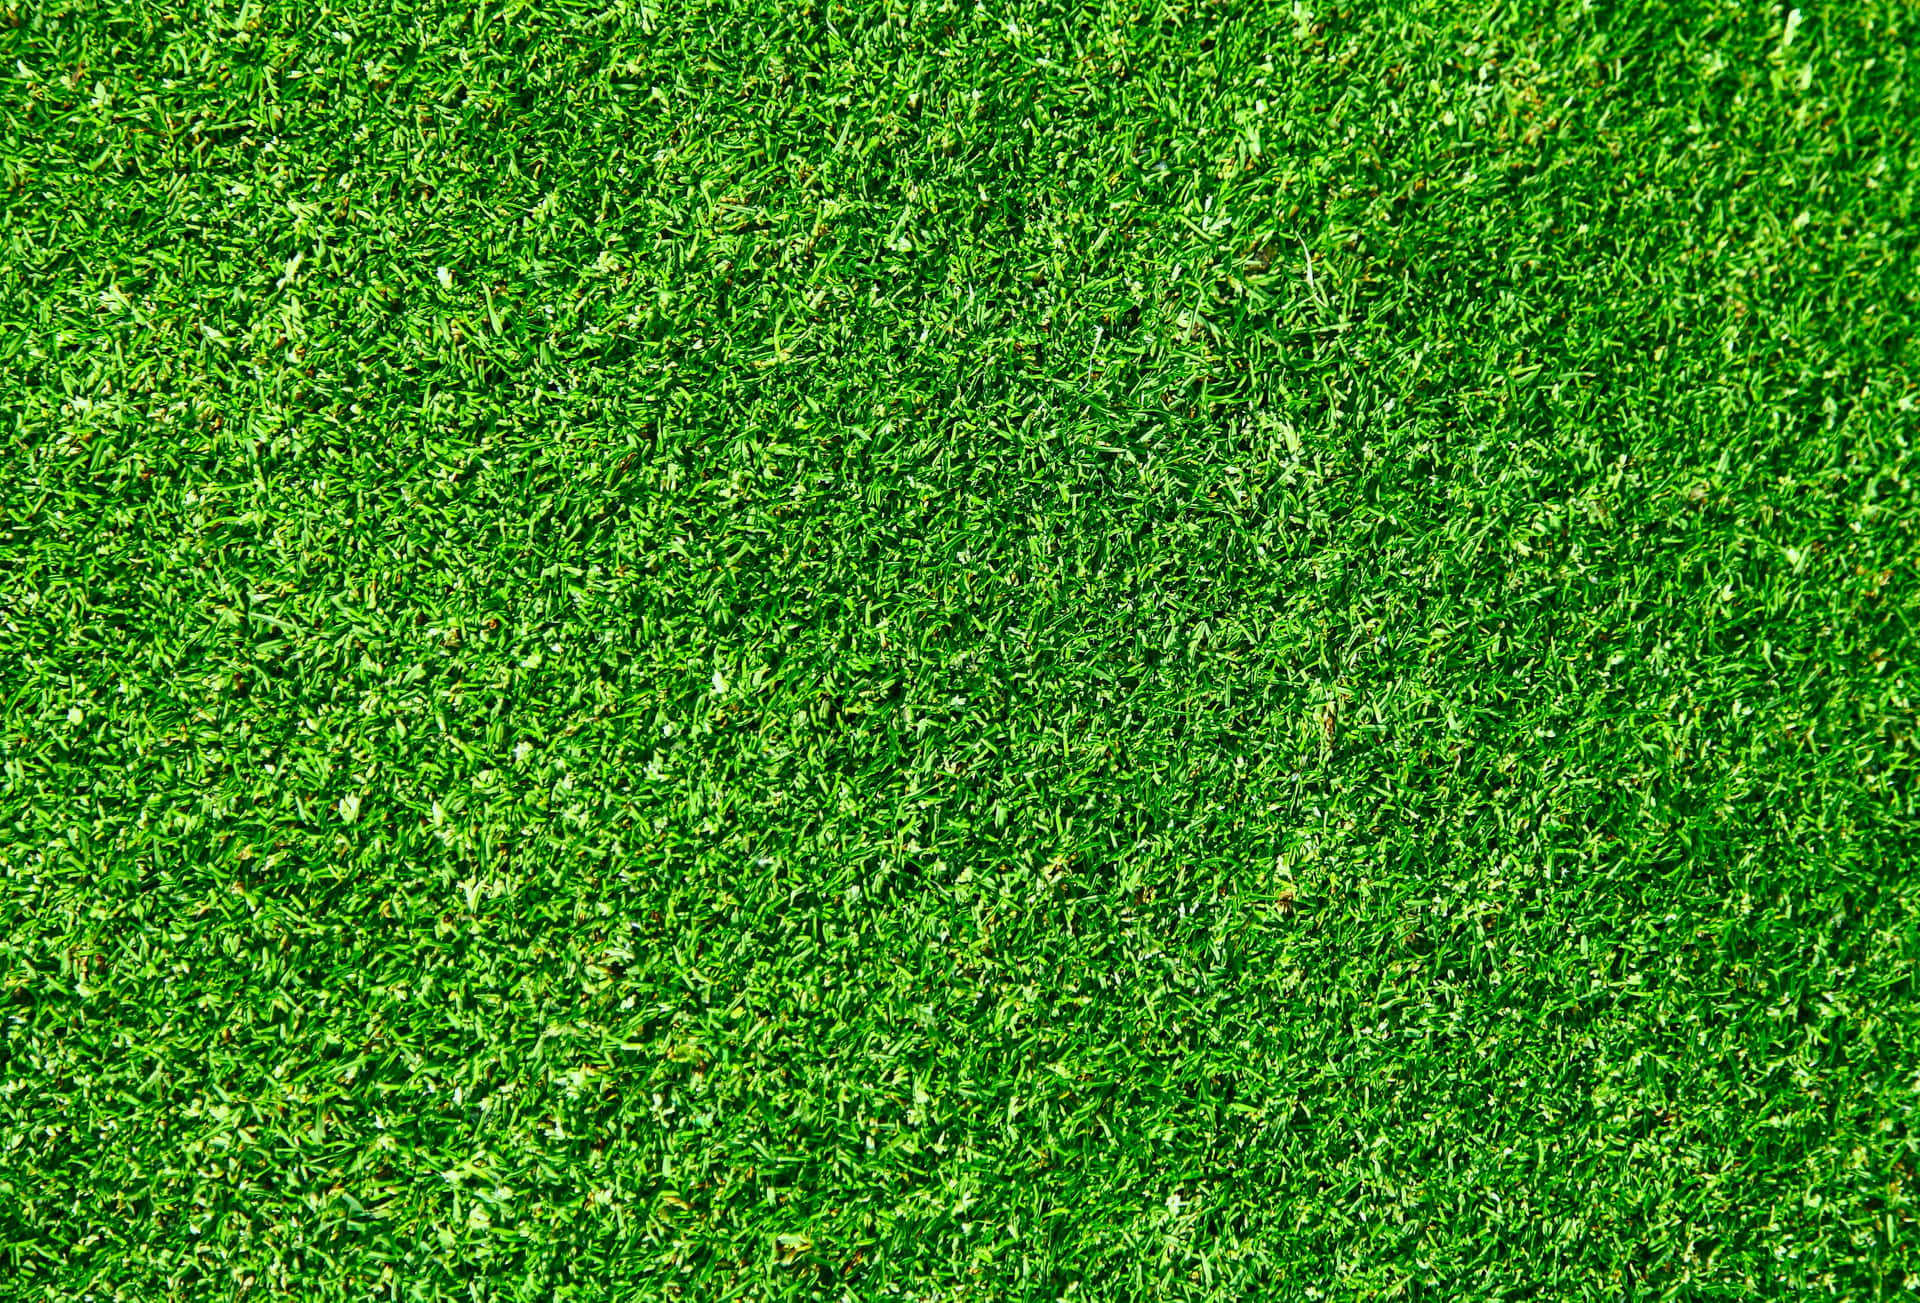 A lush, vibrant field of green grass